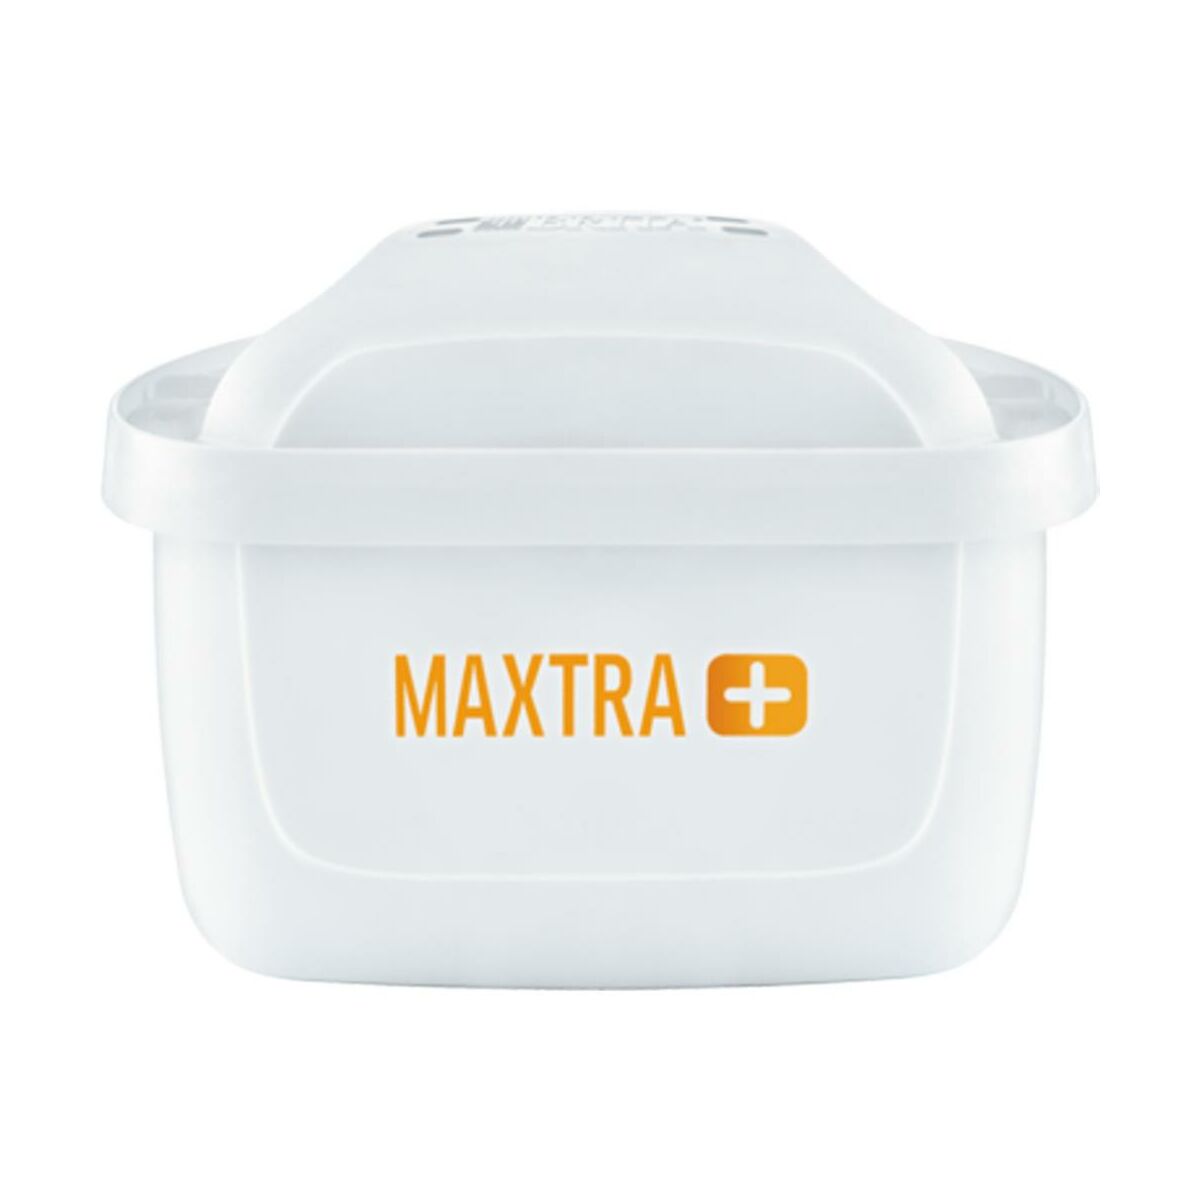 Filtr do dzbanka Maxtra+ Hard Water Expert 2 szt. Brita